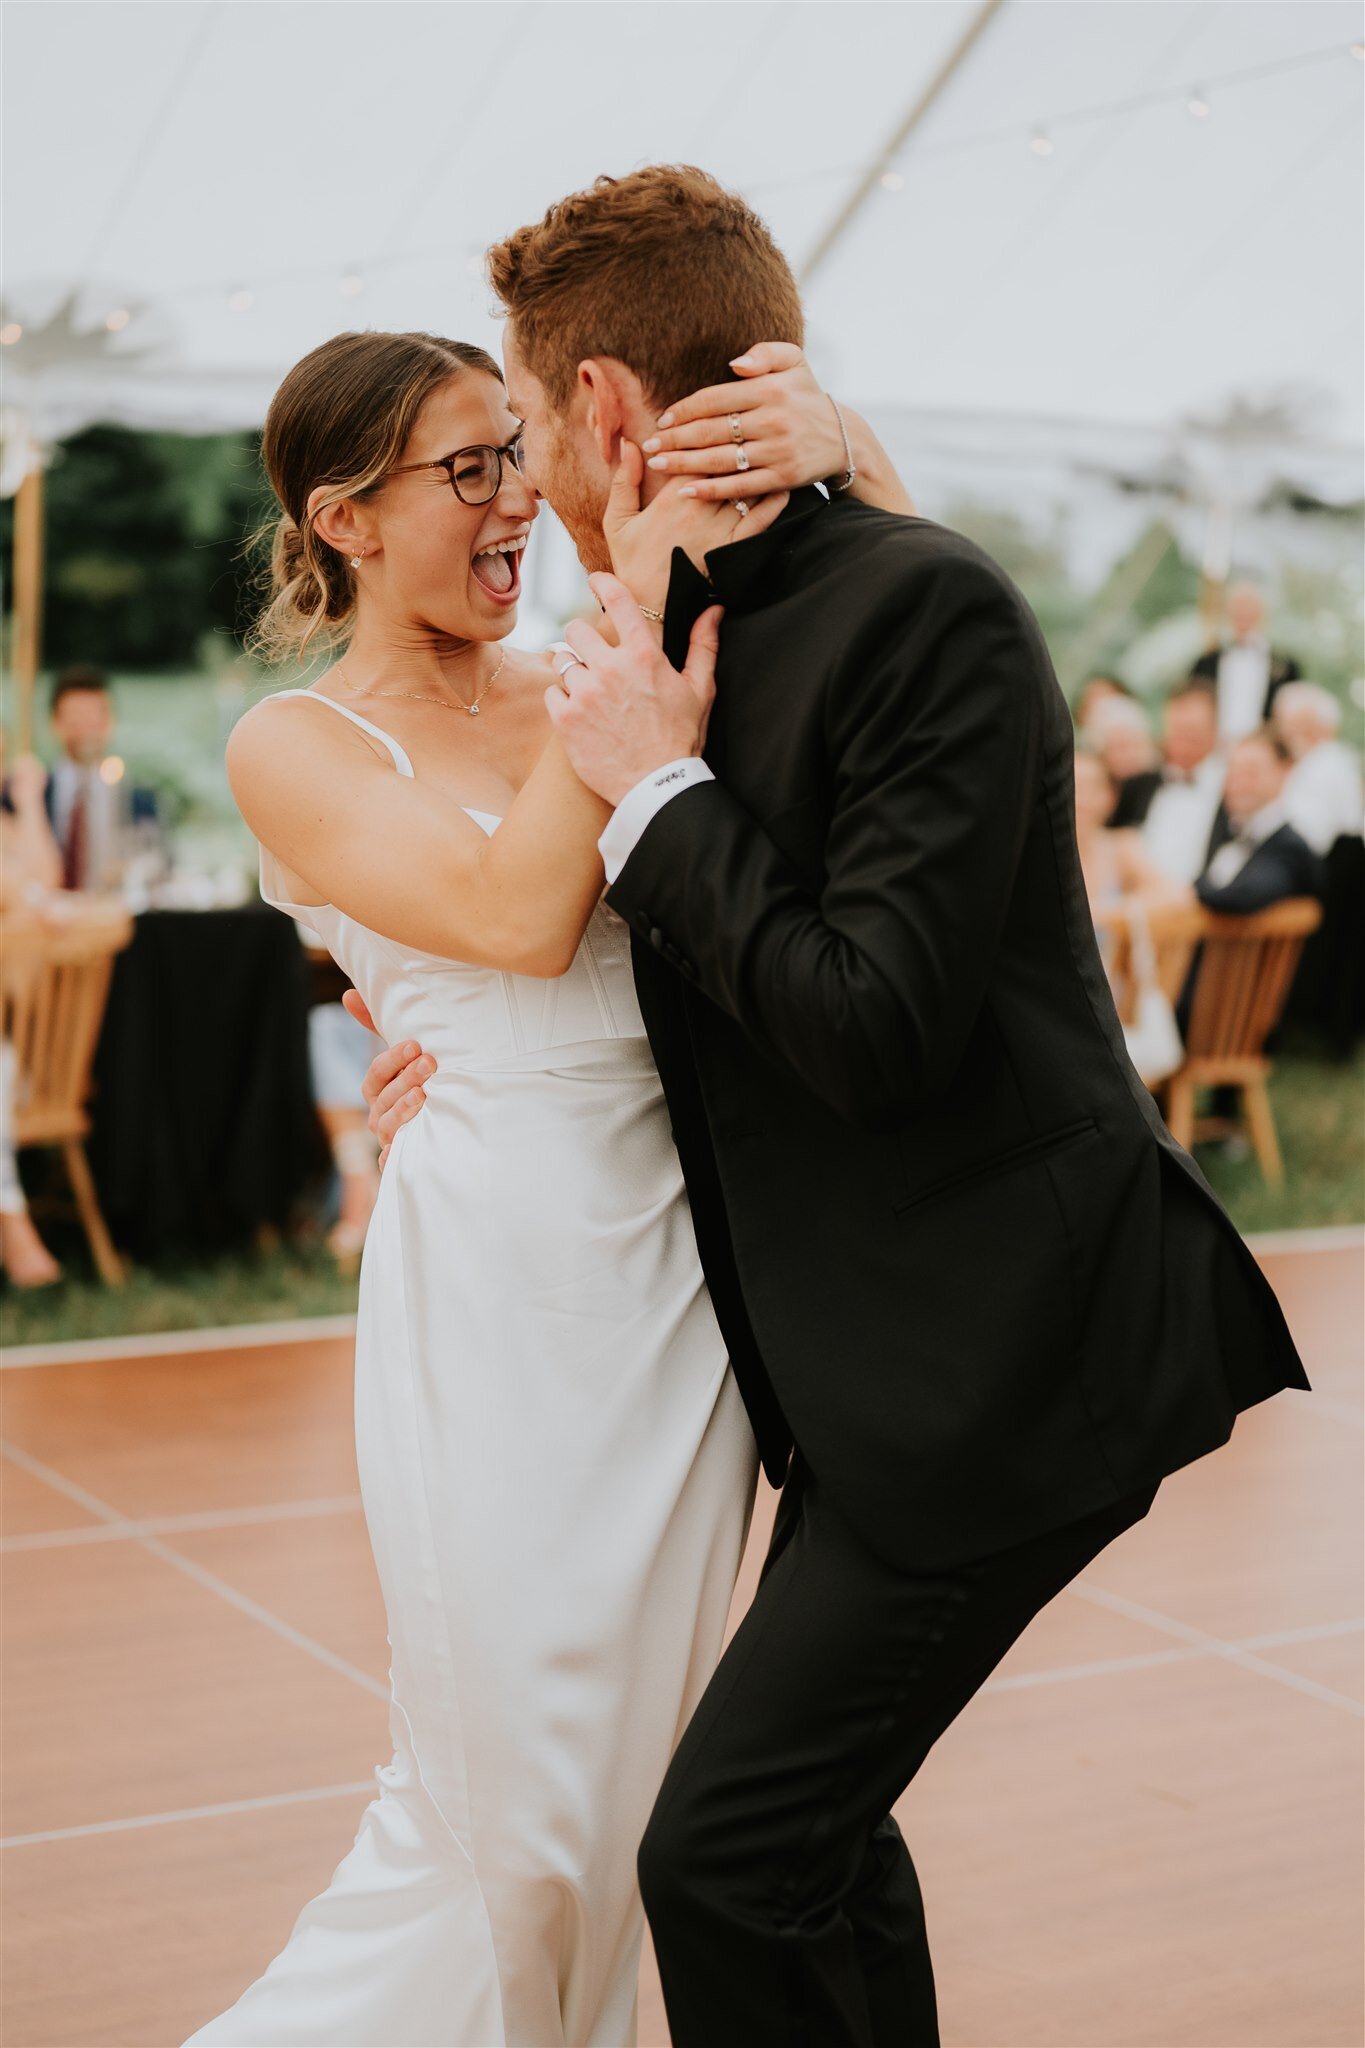 bride and groom's joyful first dance